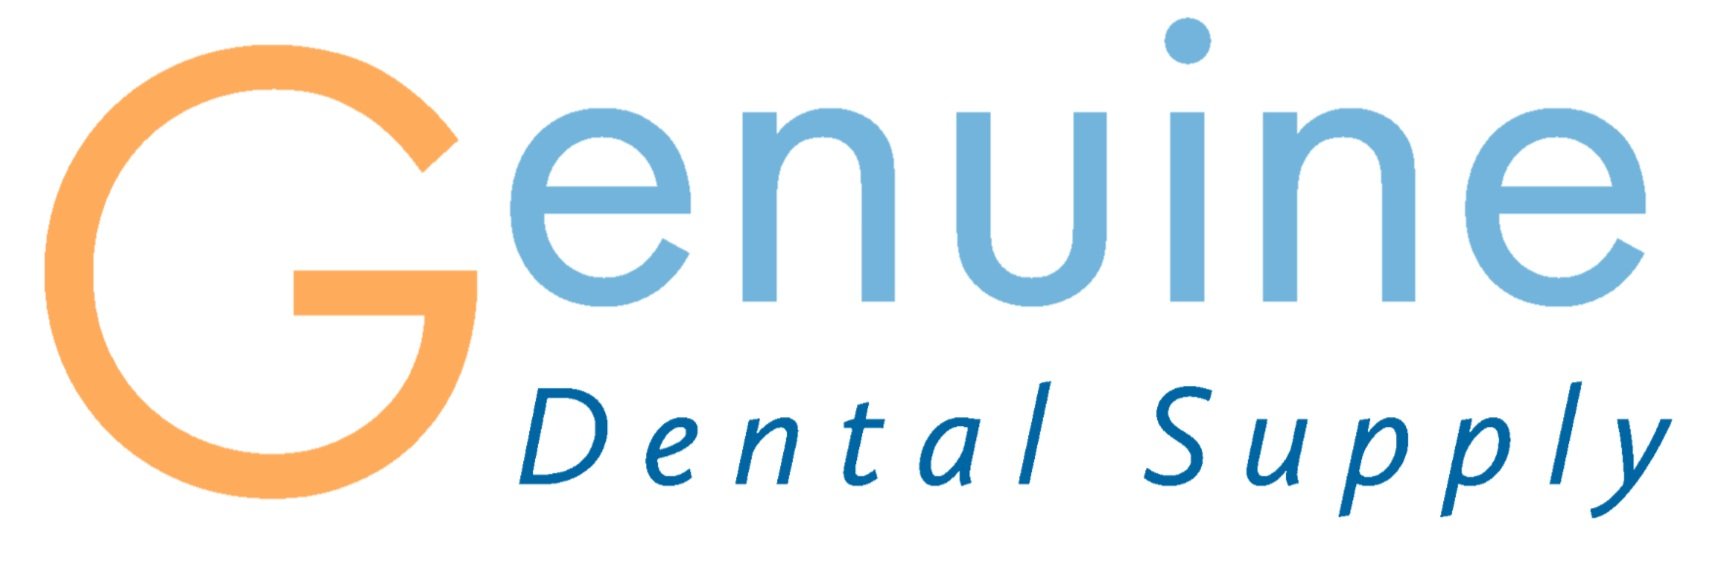 Genuine Dental Supply